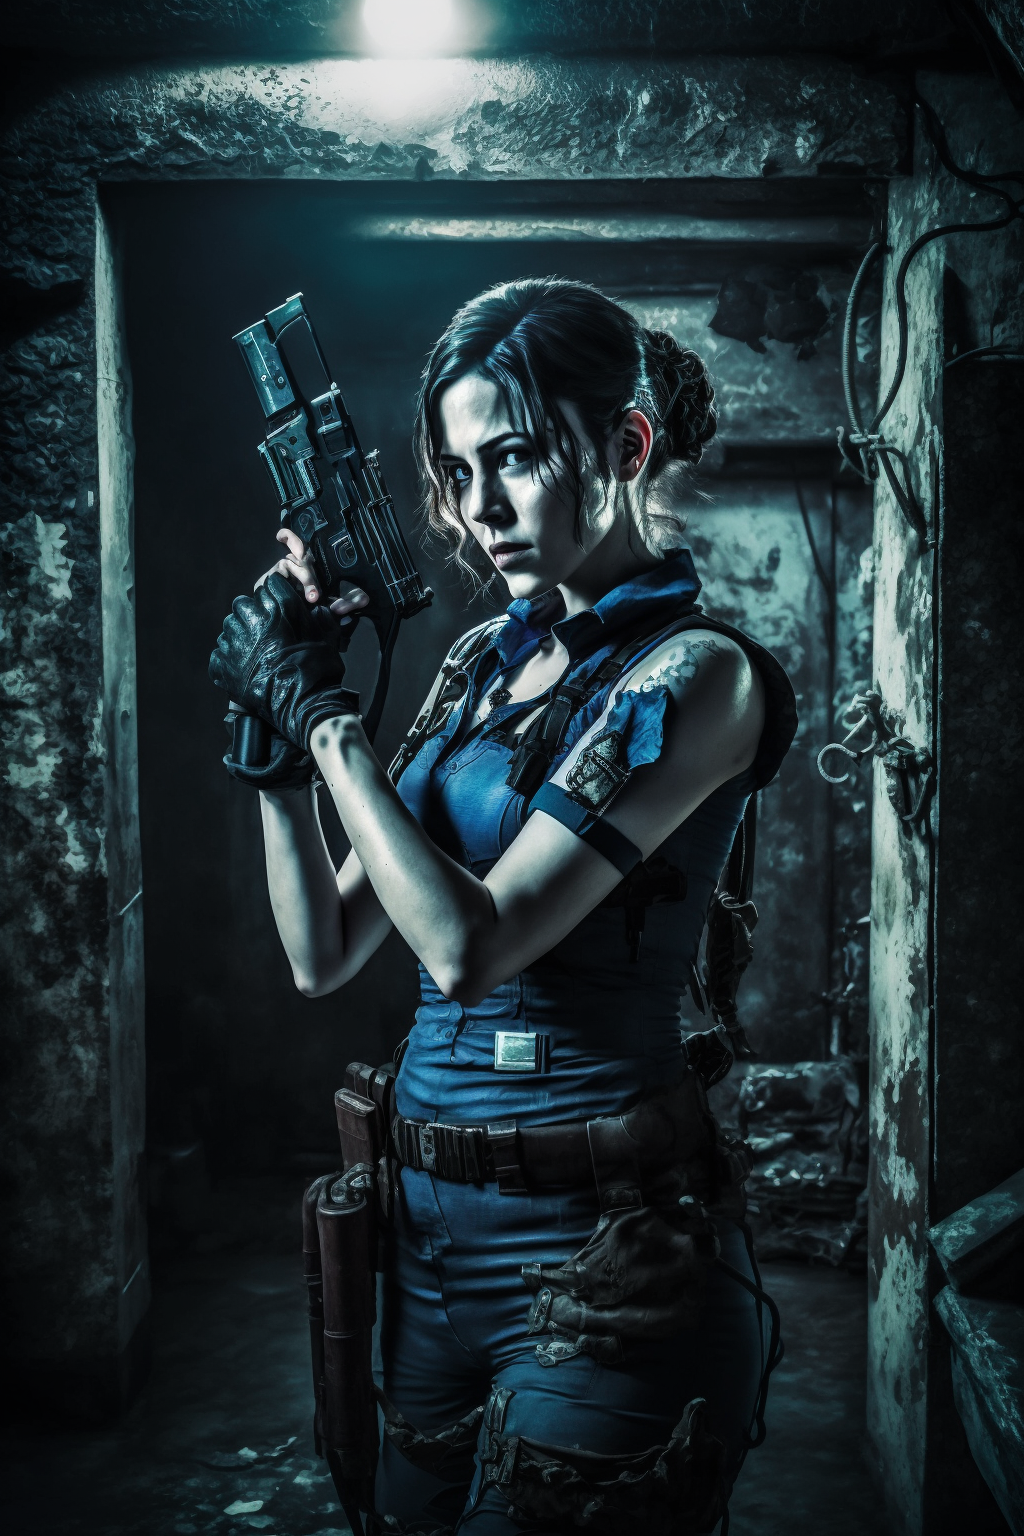 Jill Valentine Resident Evil 5 by MakeThemComeAliveAI on DeviantArt